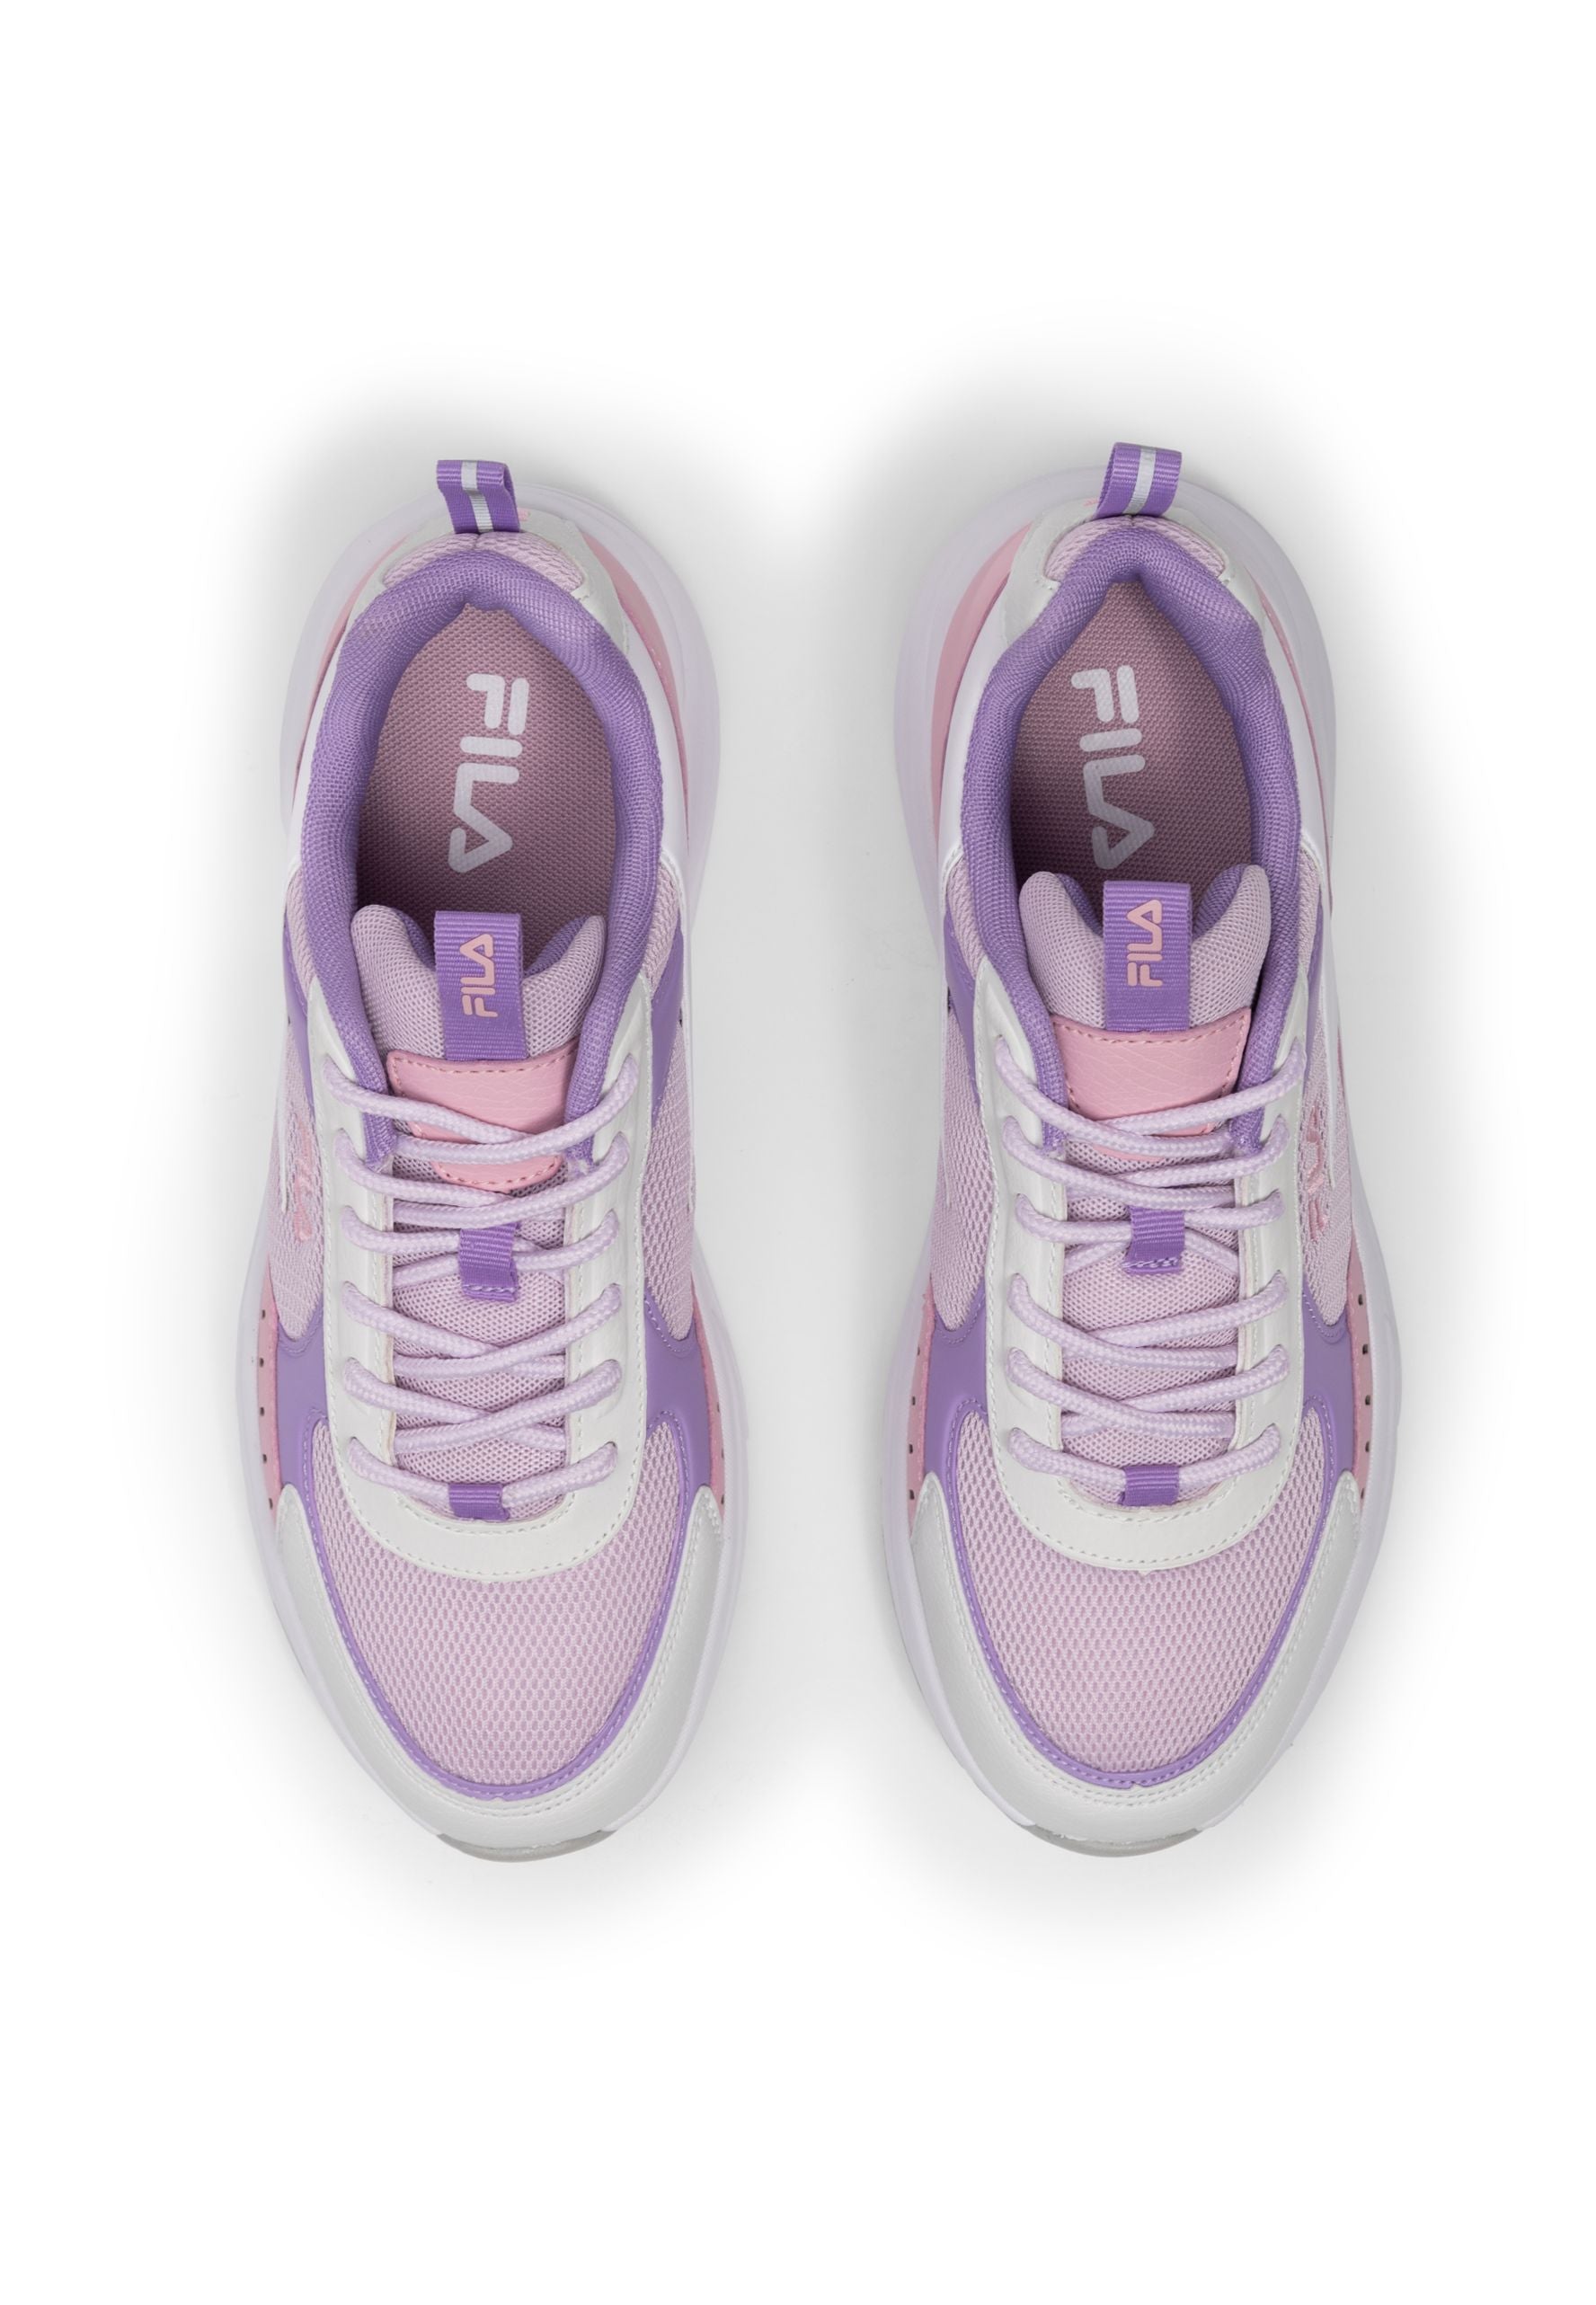 Fila Vittori Wmn in Lavender Fog-Viola Sneakers Fila   